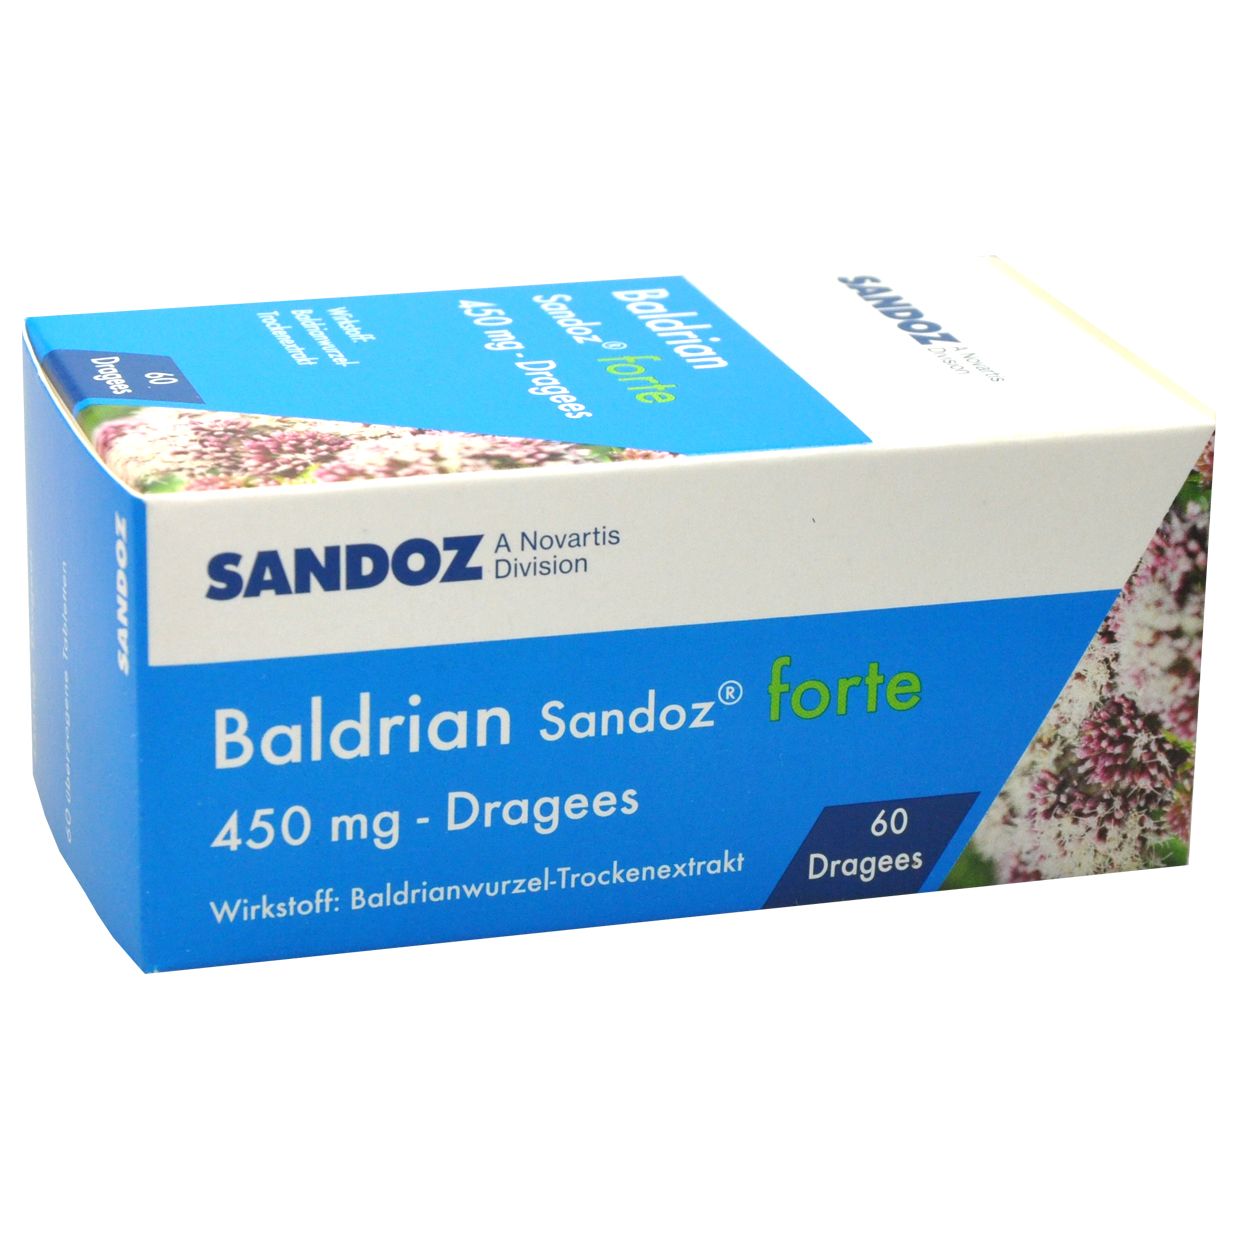 Abbildung Baldrian Sandoz forte 450 mg - Dragees